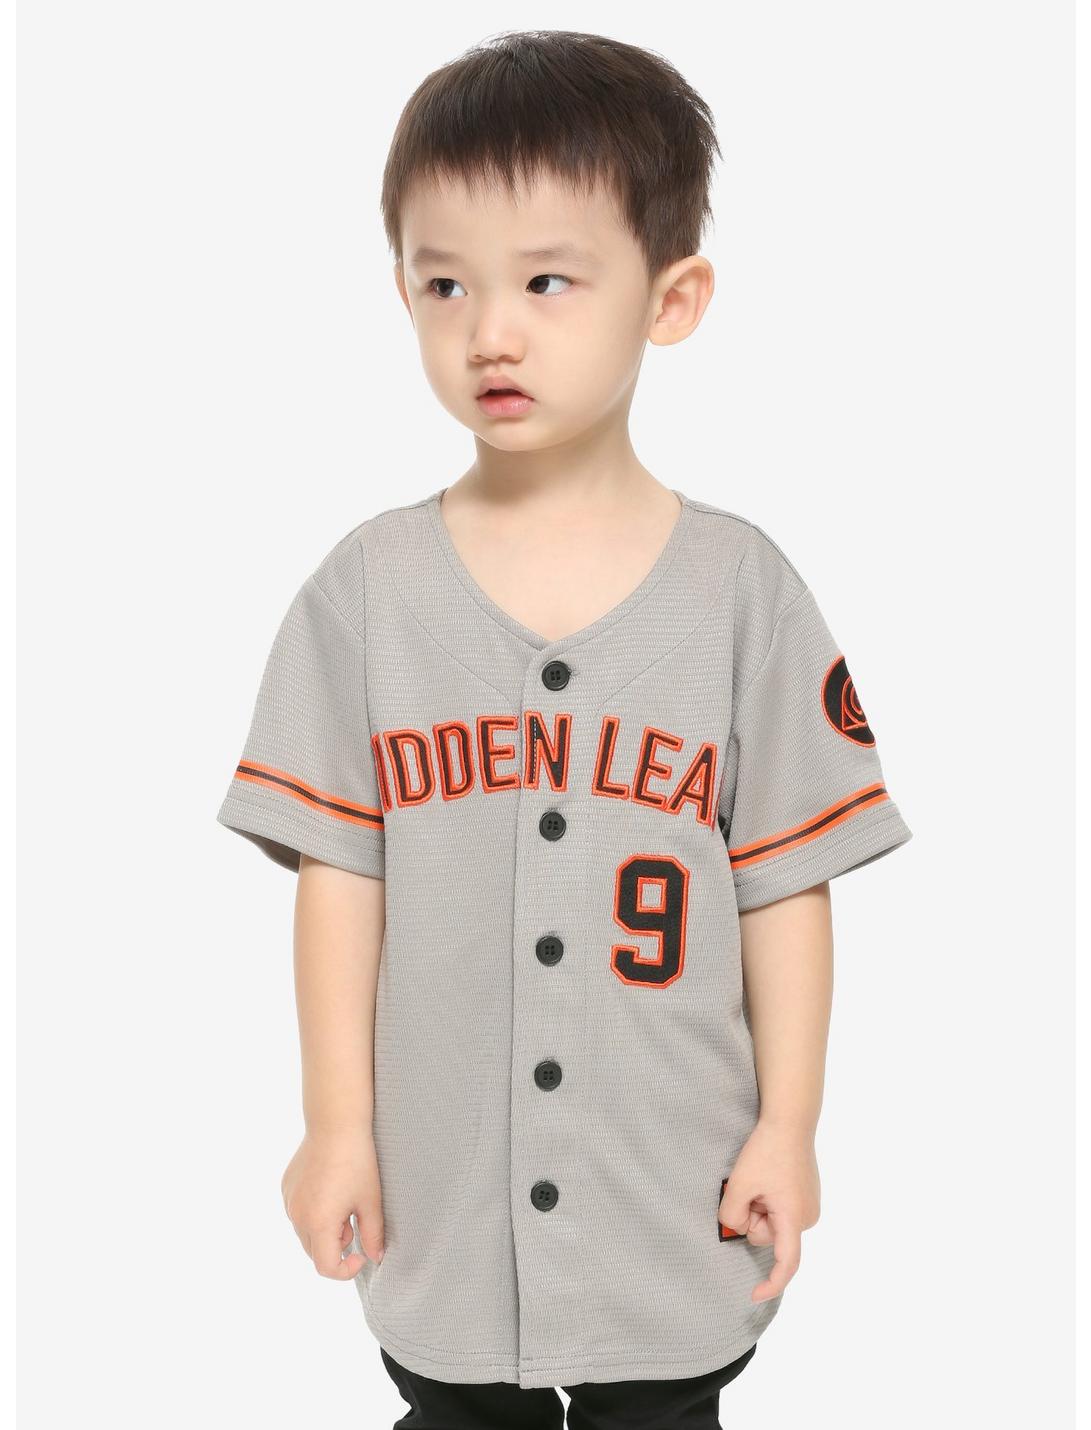 Naruto Shippuden Hidden Leaf Toddler Baseball Jersey - BoxLunch Exclusive, ORANGE, hi-res